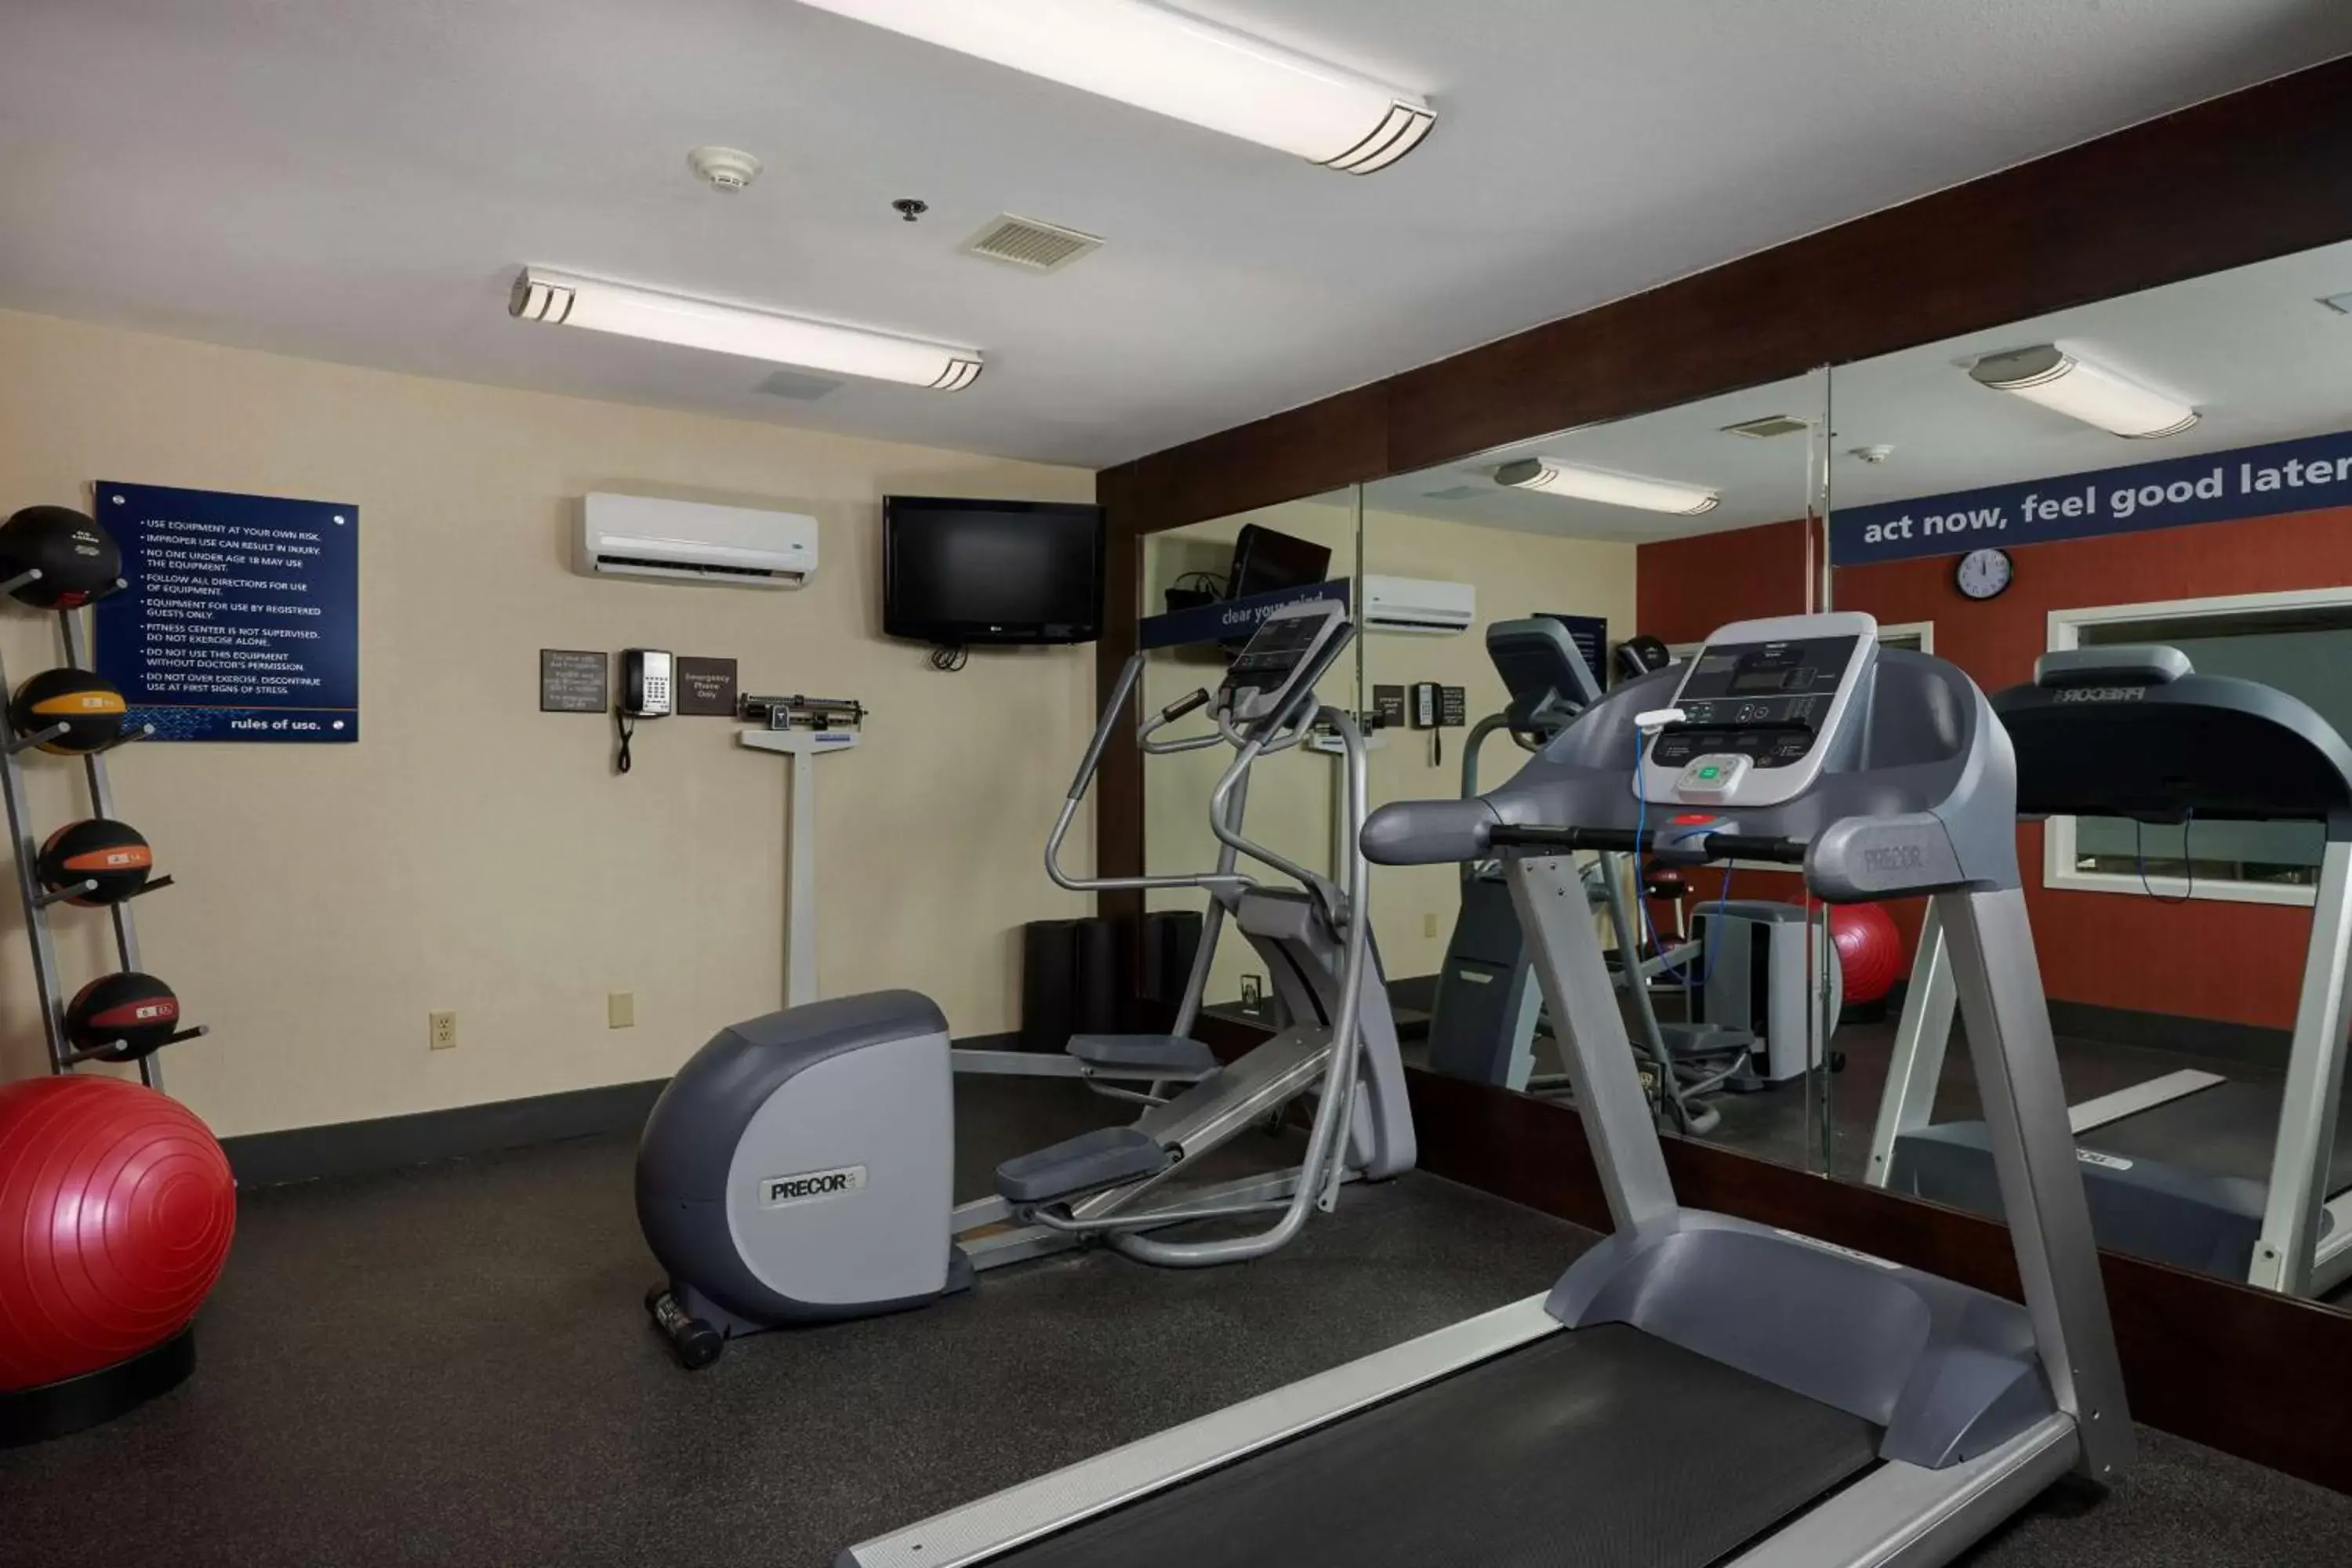 Fitness centre/facilities, Fitness Center/Facilities in Hampton Inn Alamogordo